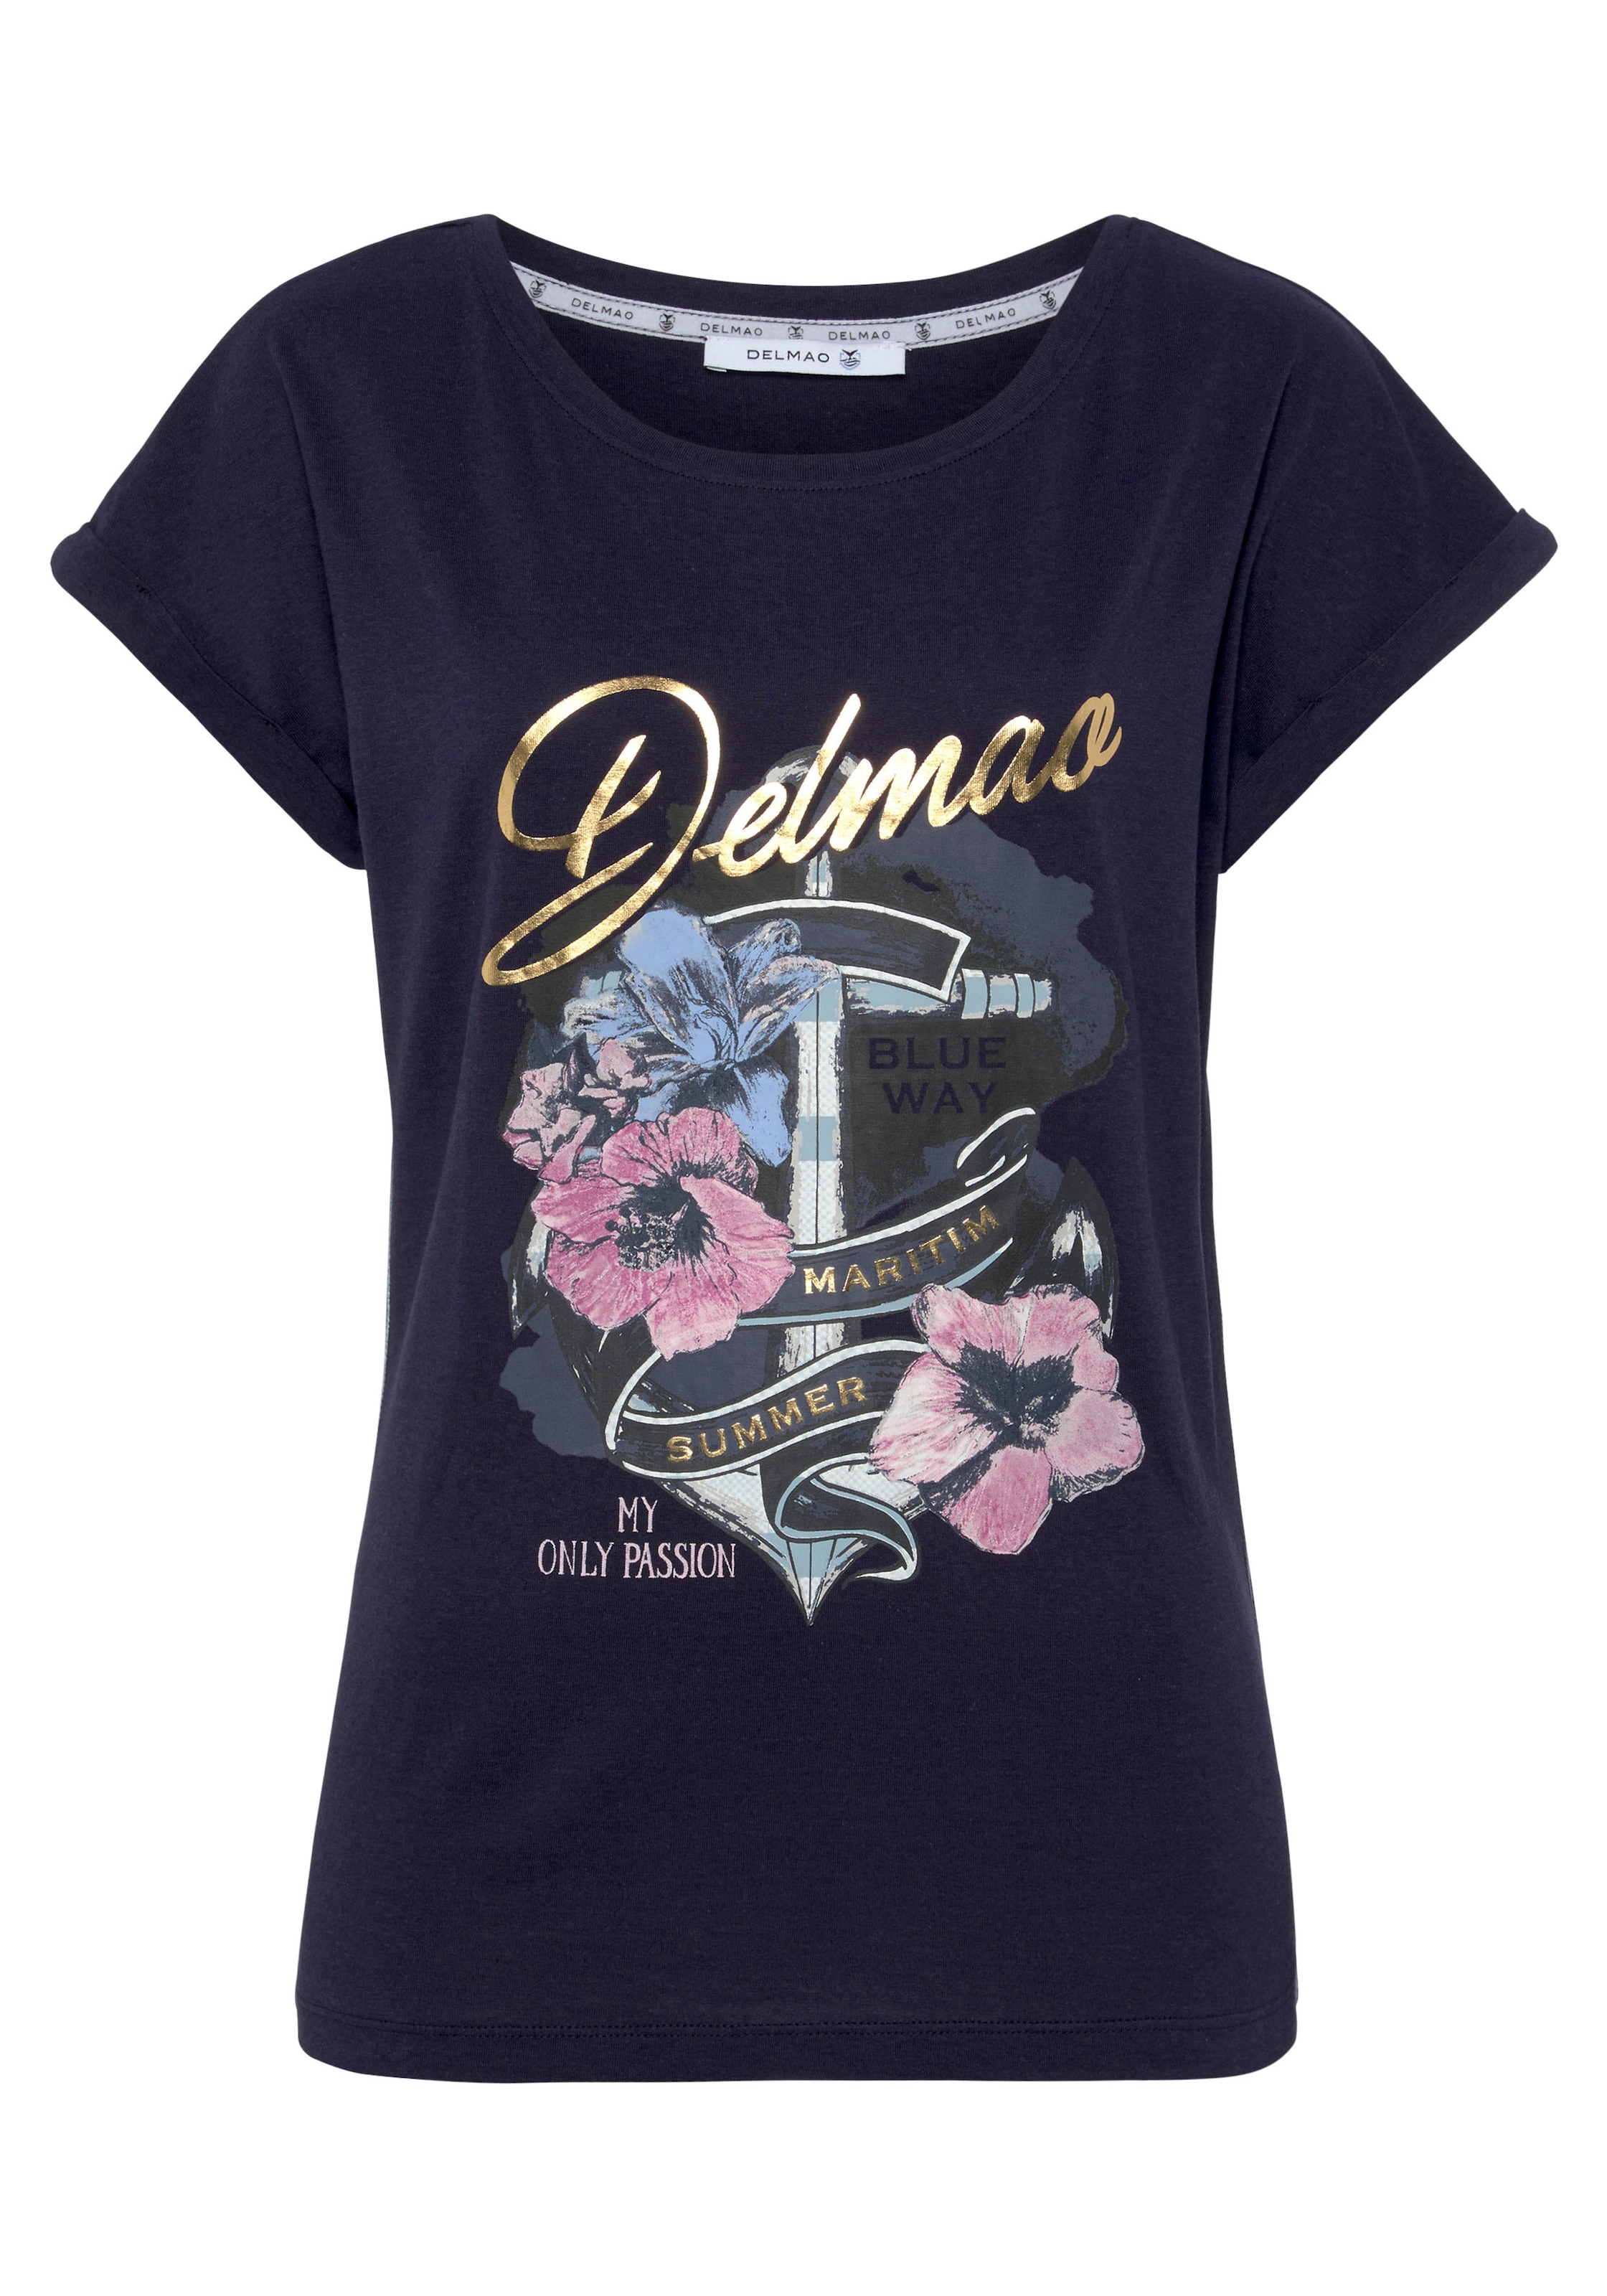 DELMAO Print-Shirt, mit geblümten Anker-Logodruck - NEUE MARKE! shoppen